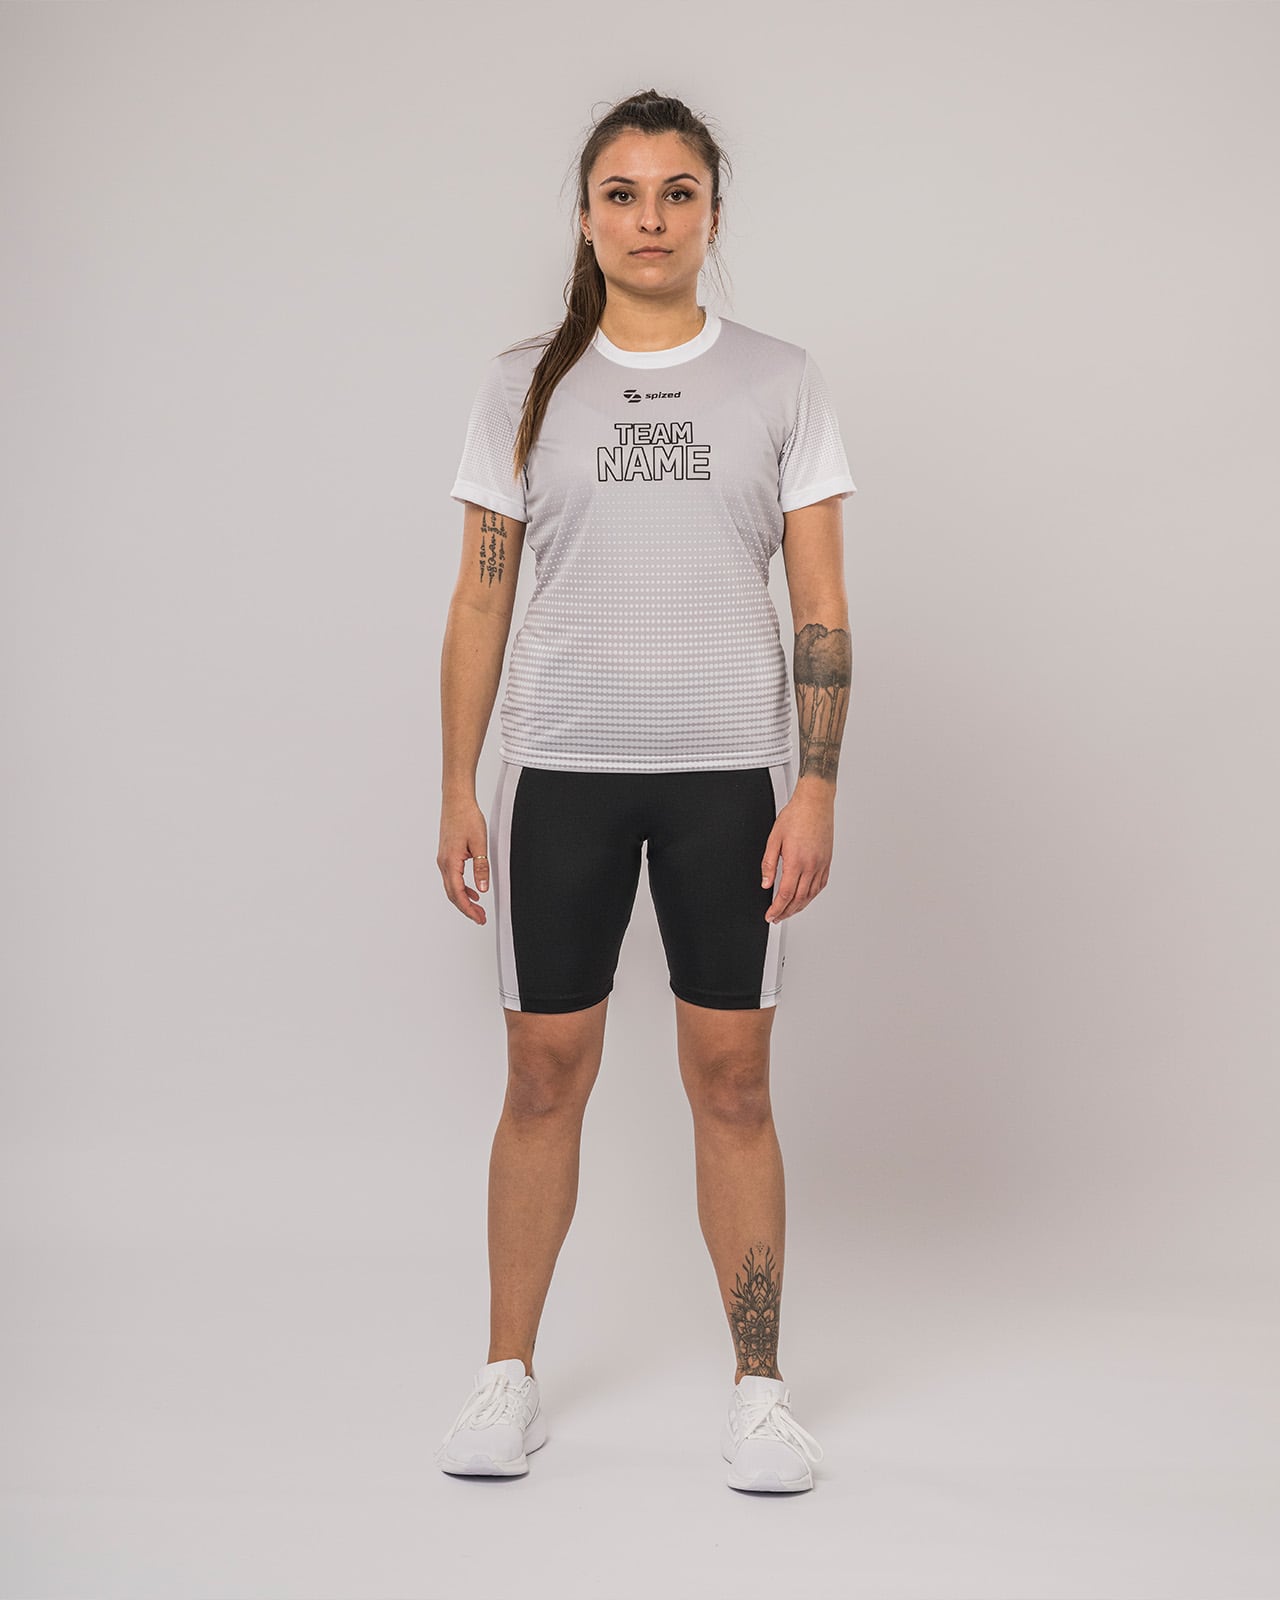 Women’s Balance running shirt